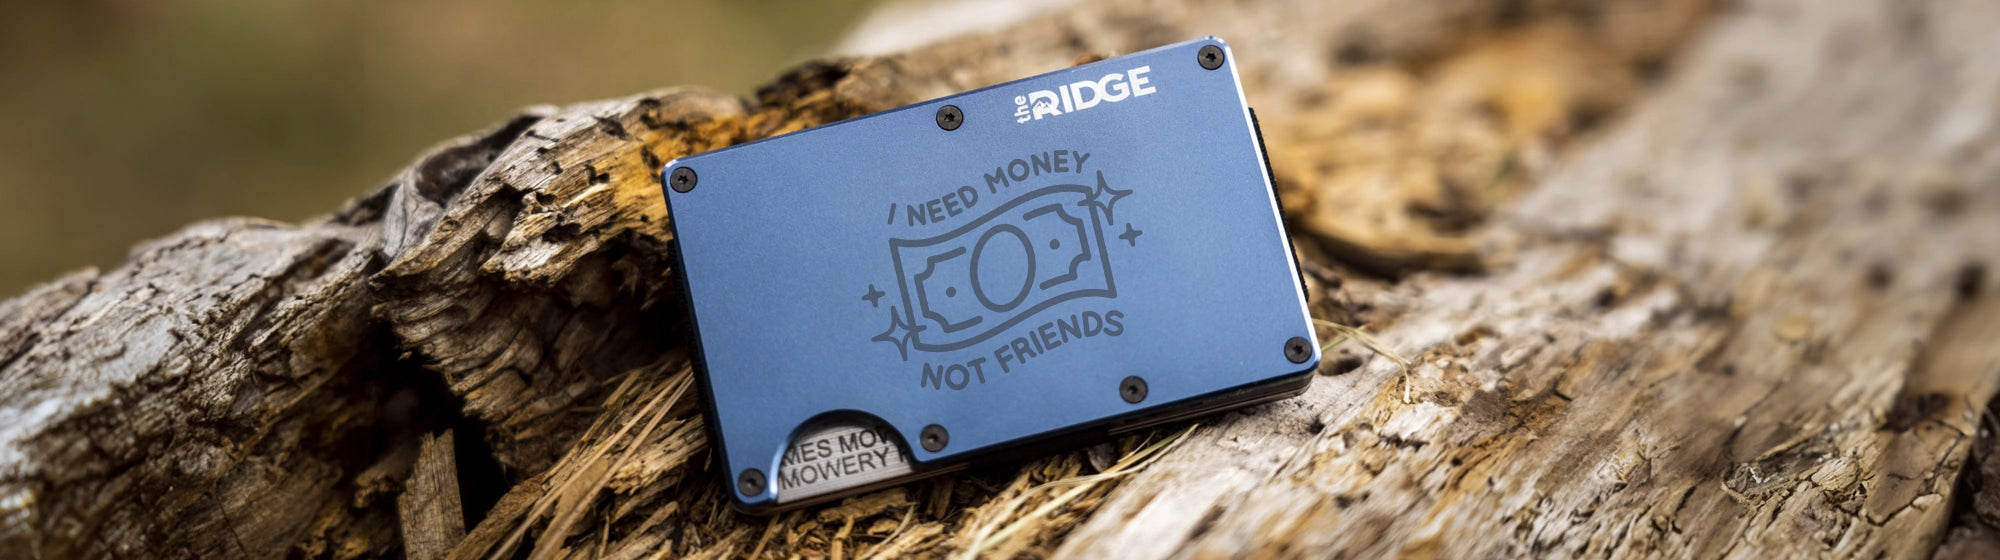 personalized ridge wallet.  personalization reads i need money not friends.